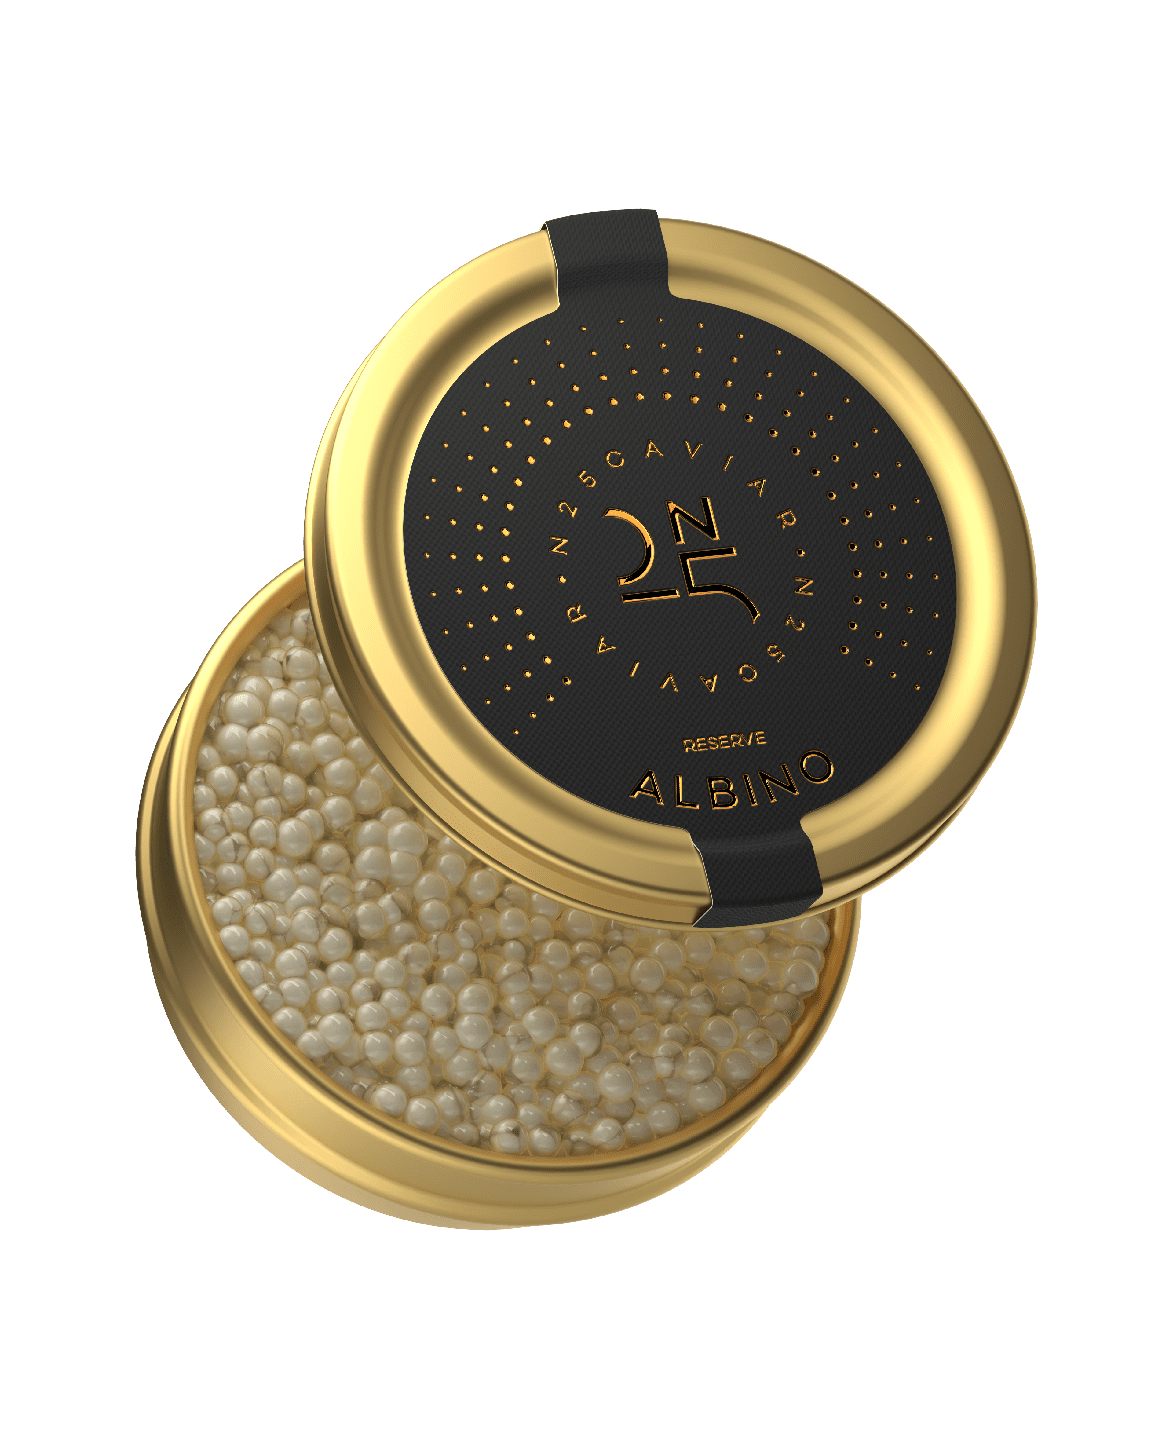 N25 Almas Caviar